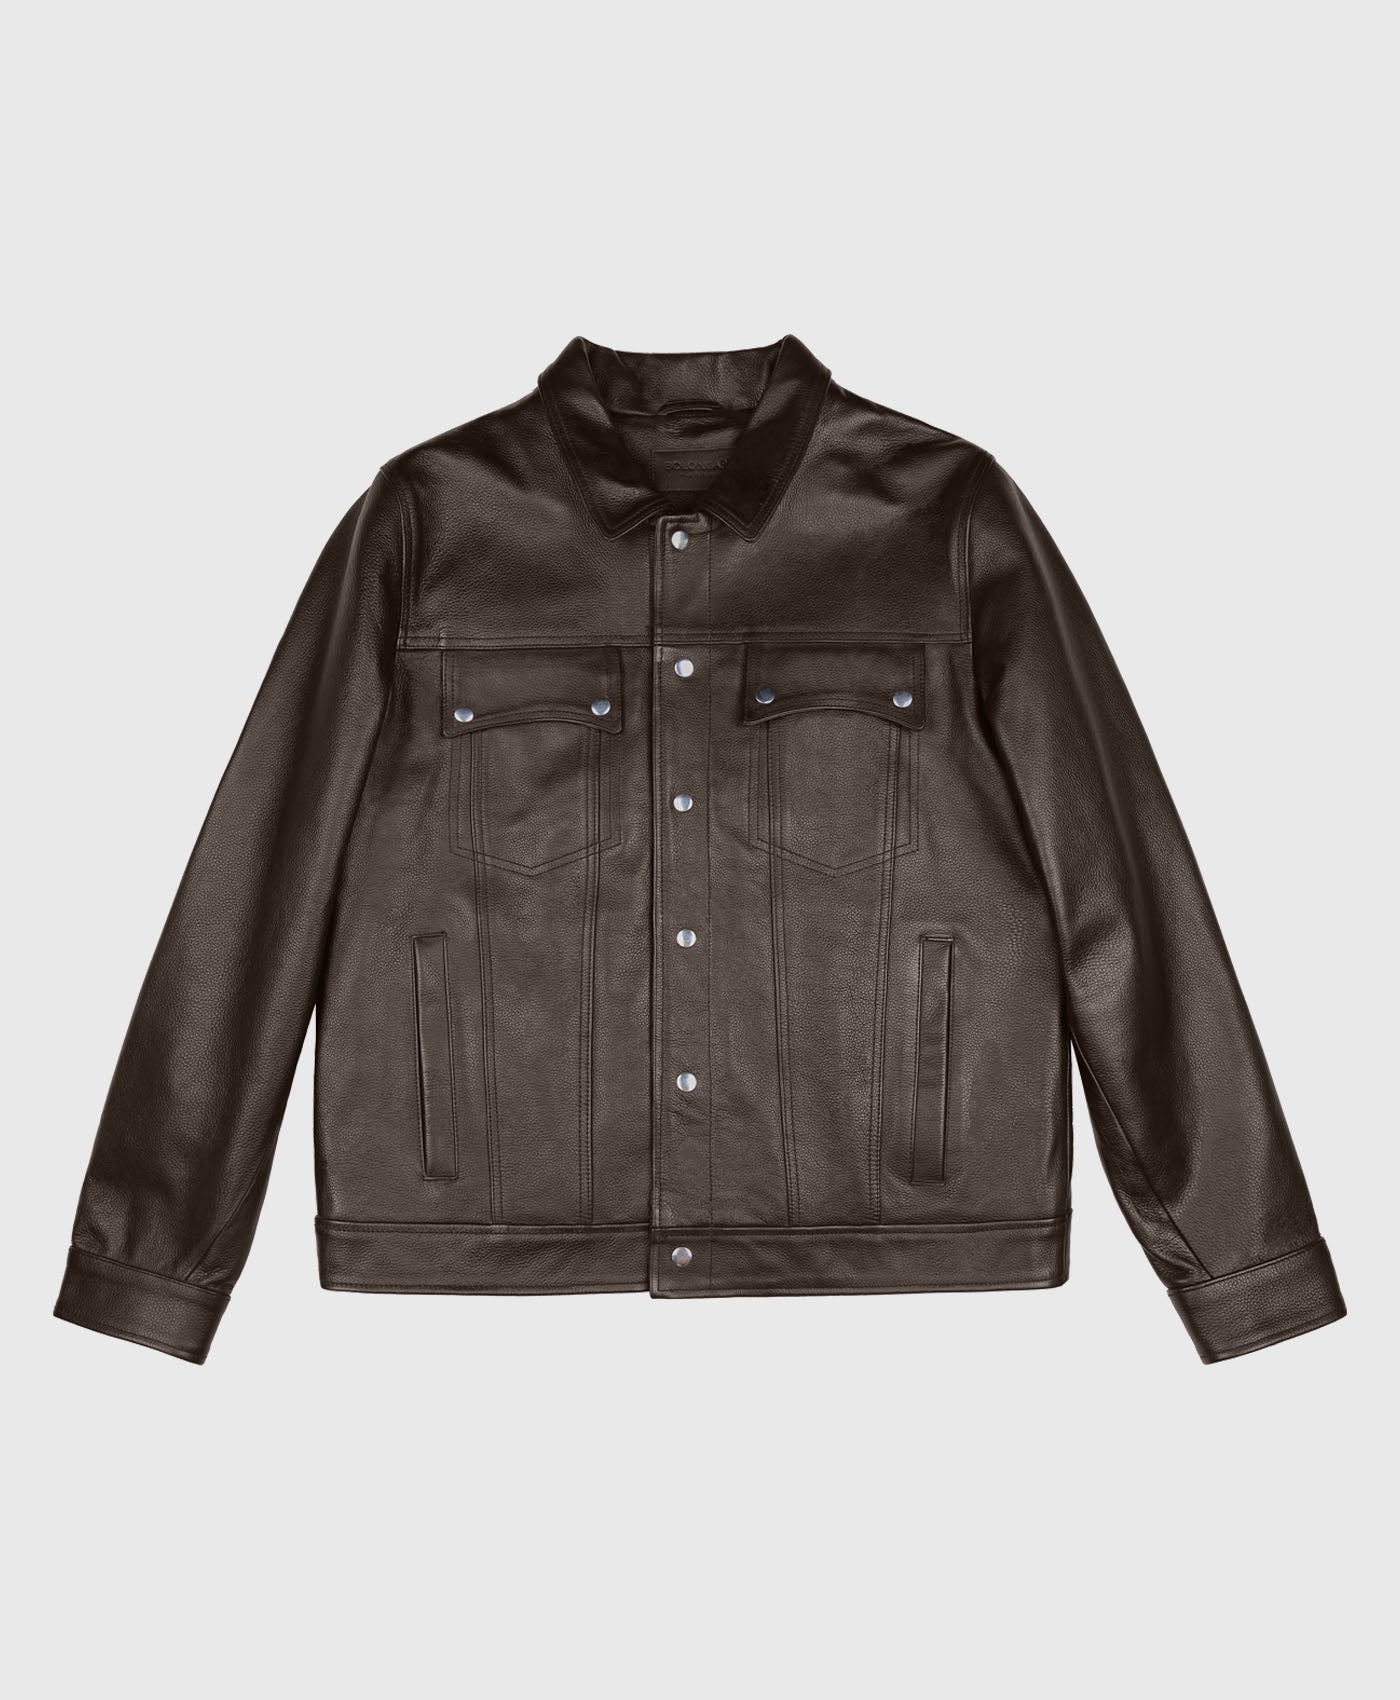 Western Leather Jacket In Dark Brown